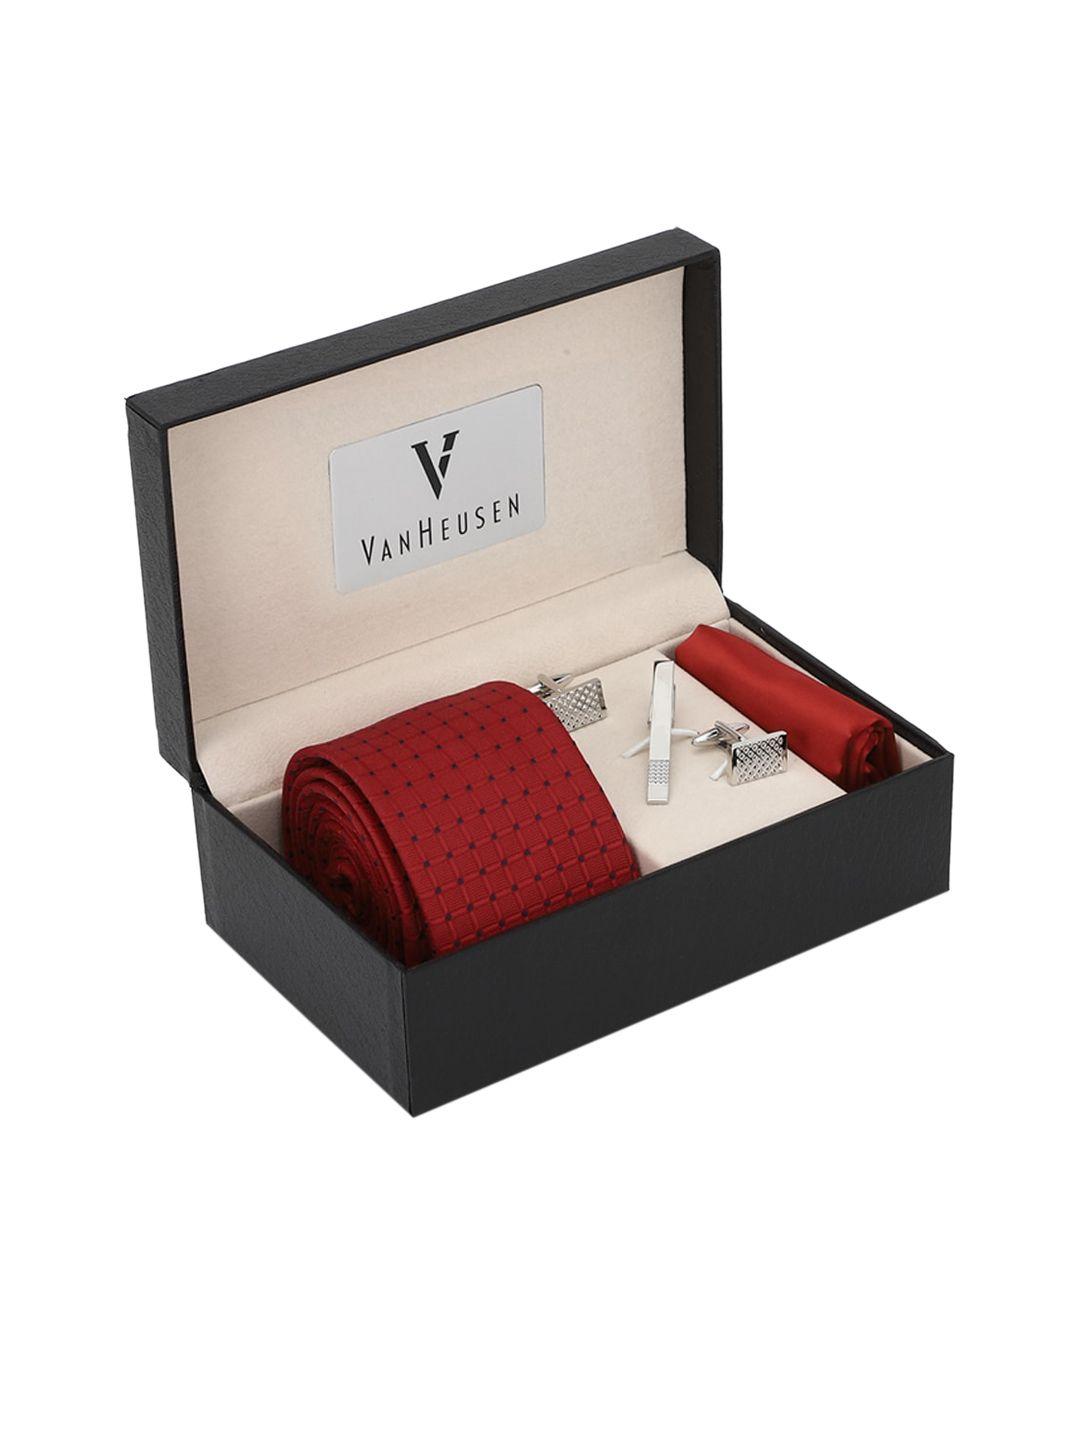 van heusen men red self-design pocket square tie cufflink and tie pin accessory gift set